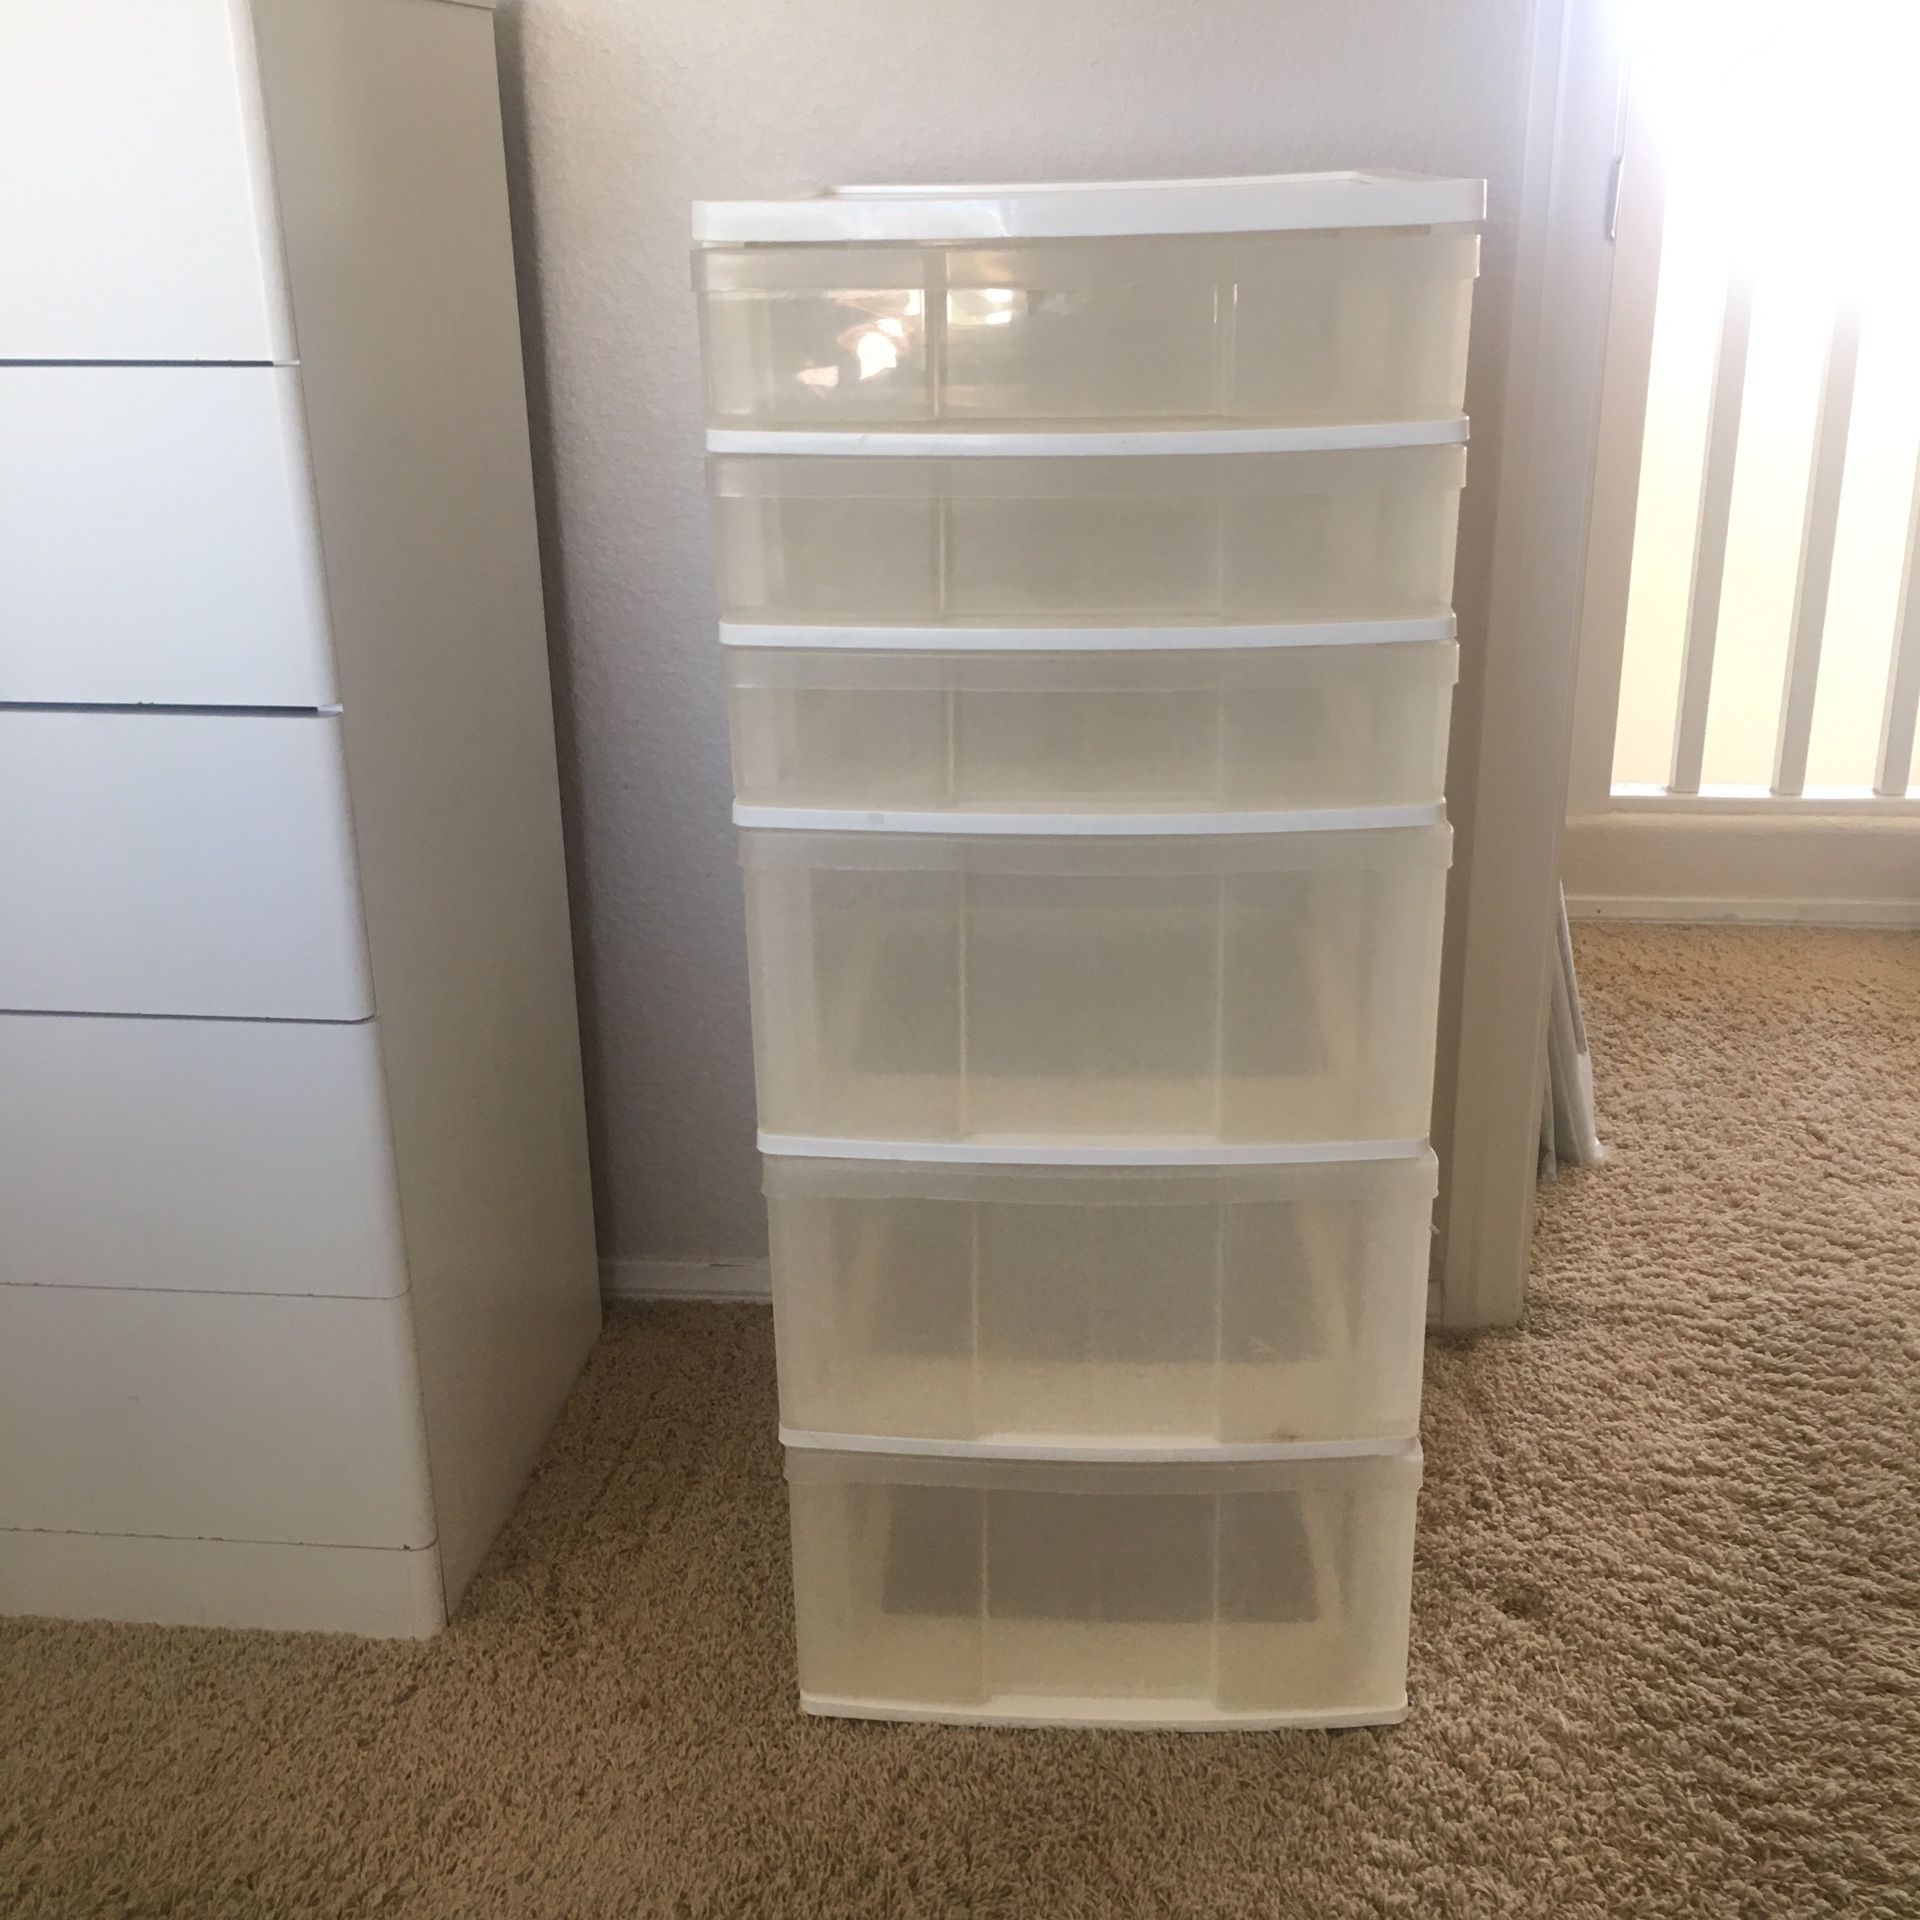 White plastic drawer organizer